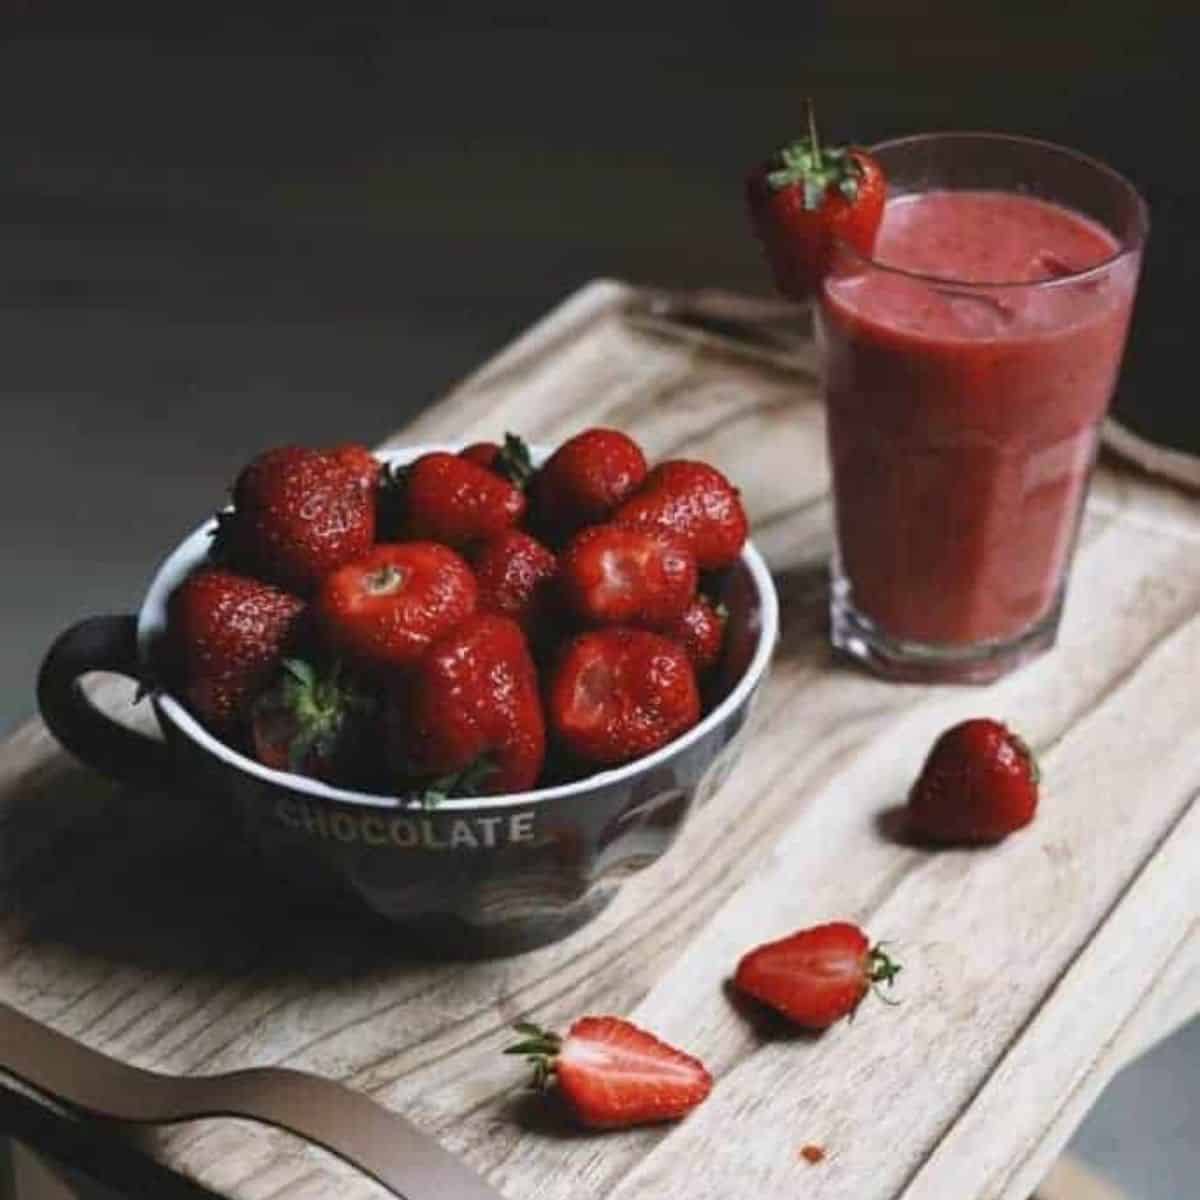 Strawberry smoothie recipe.